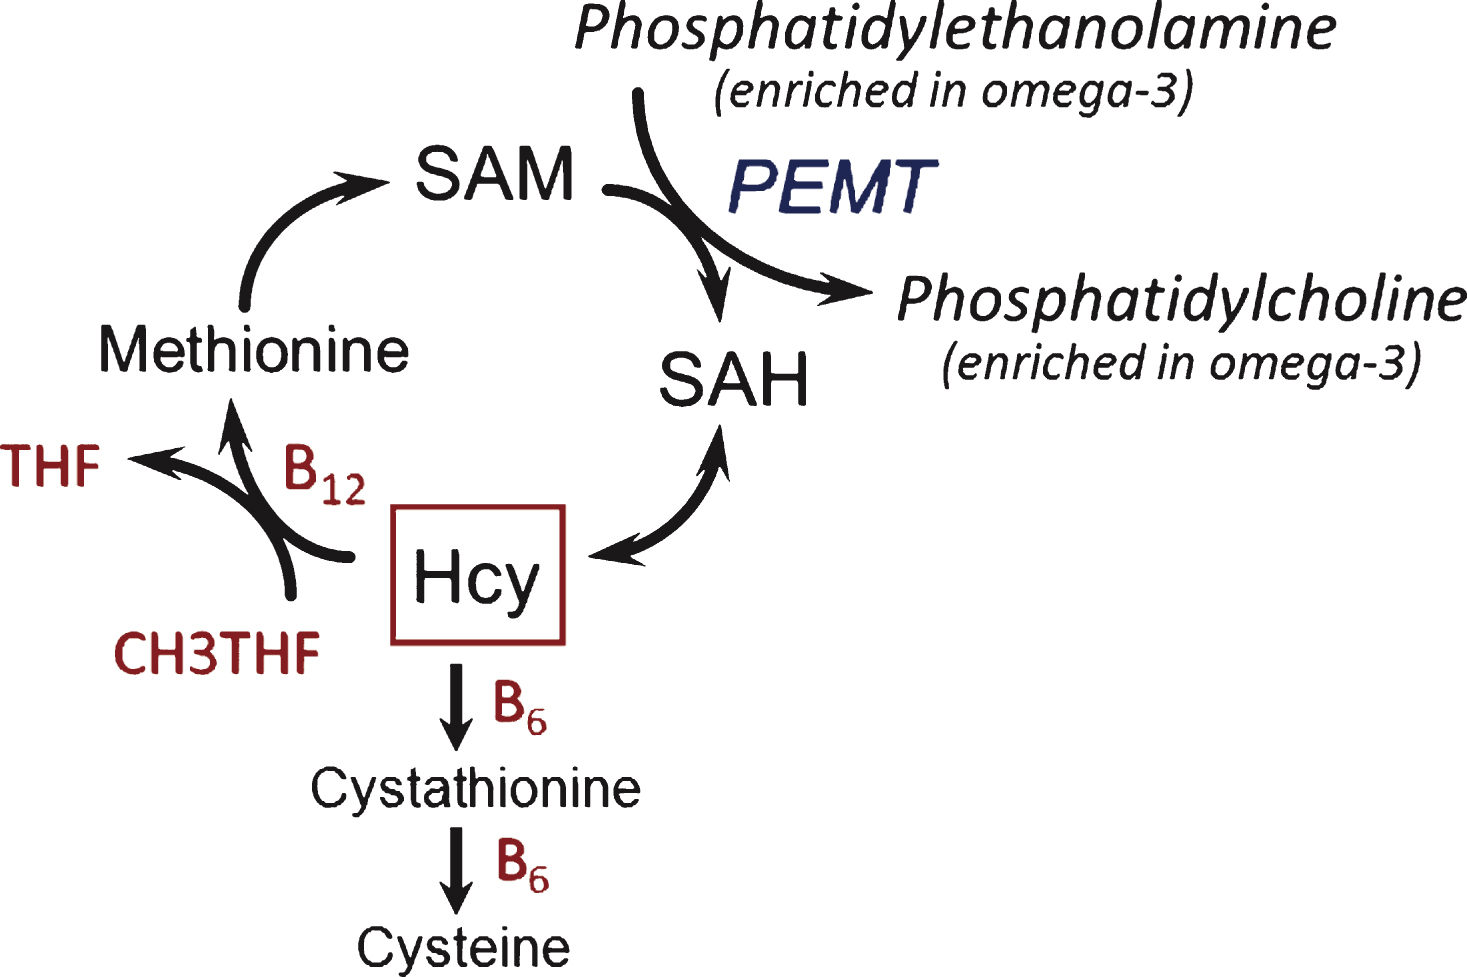 Metabolic interactions in the homocysteine methylation cycle with omega-3 fatty acids. Hcy, homocysteine; PEMT, phosphatidylethanolamine N-methyl transferase; SAH, S-adenosylhomocysteine; SAM, S-adenosylmethionine; THF, tetrahydrofolate.